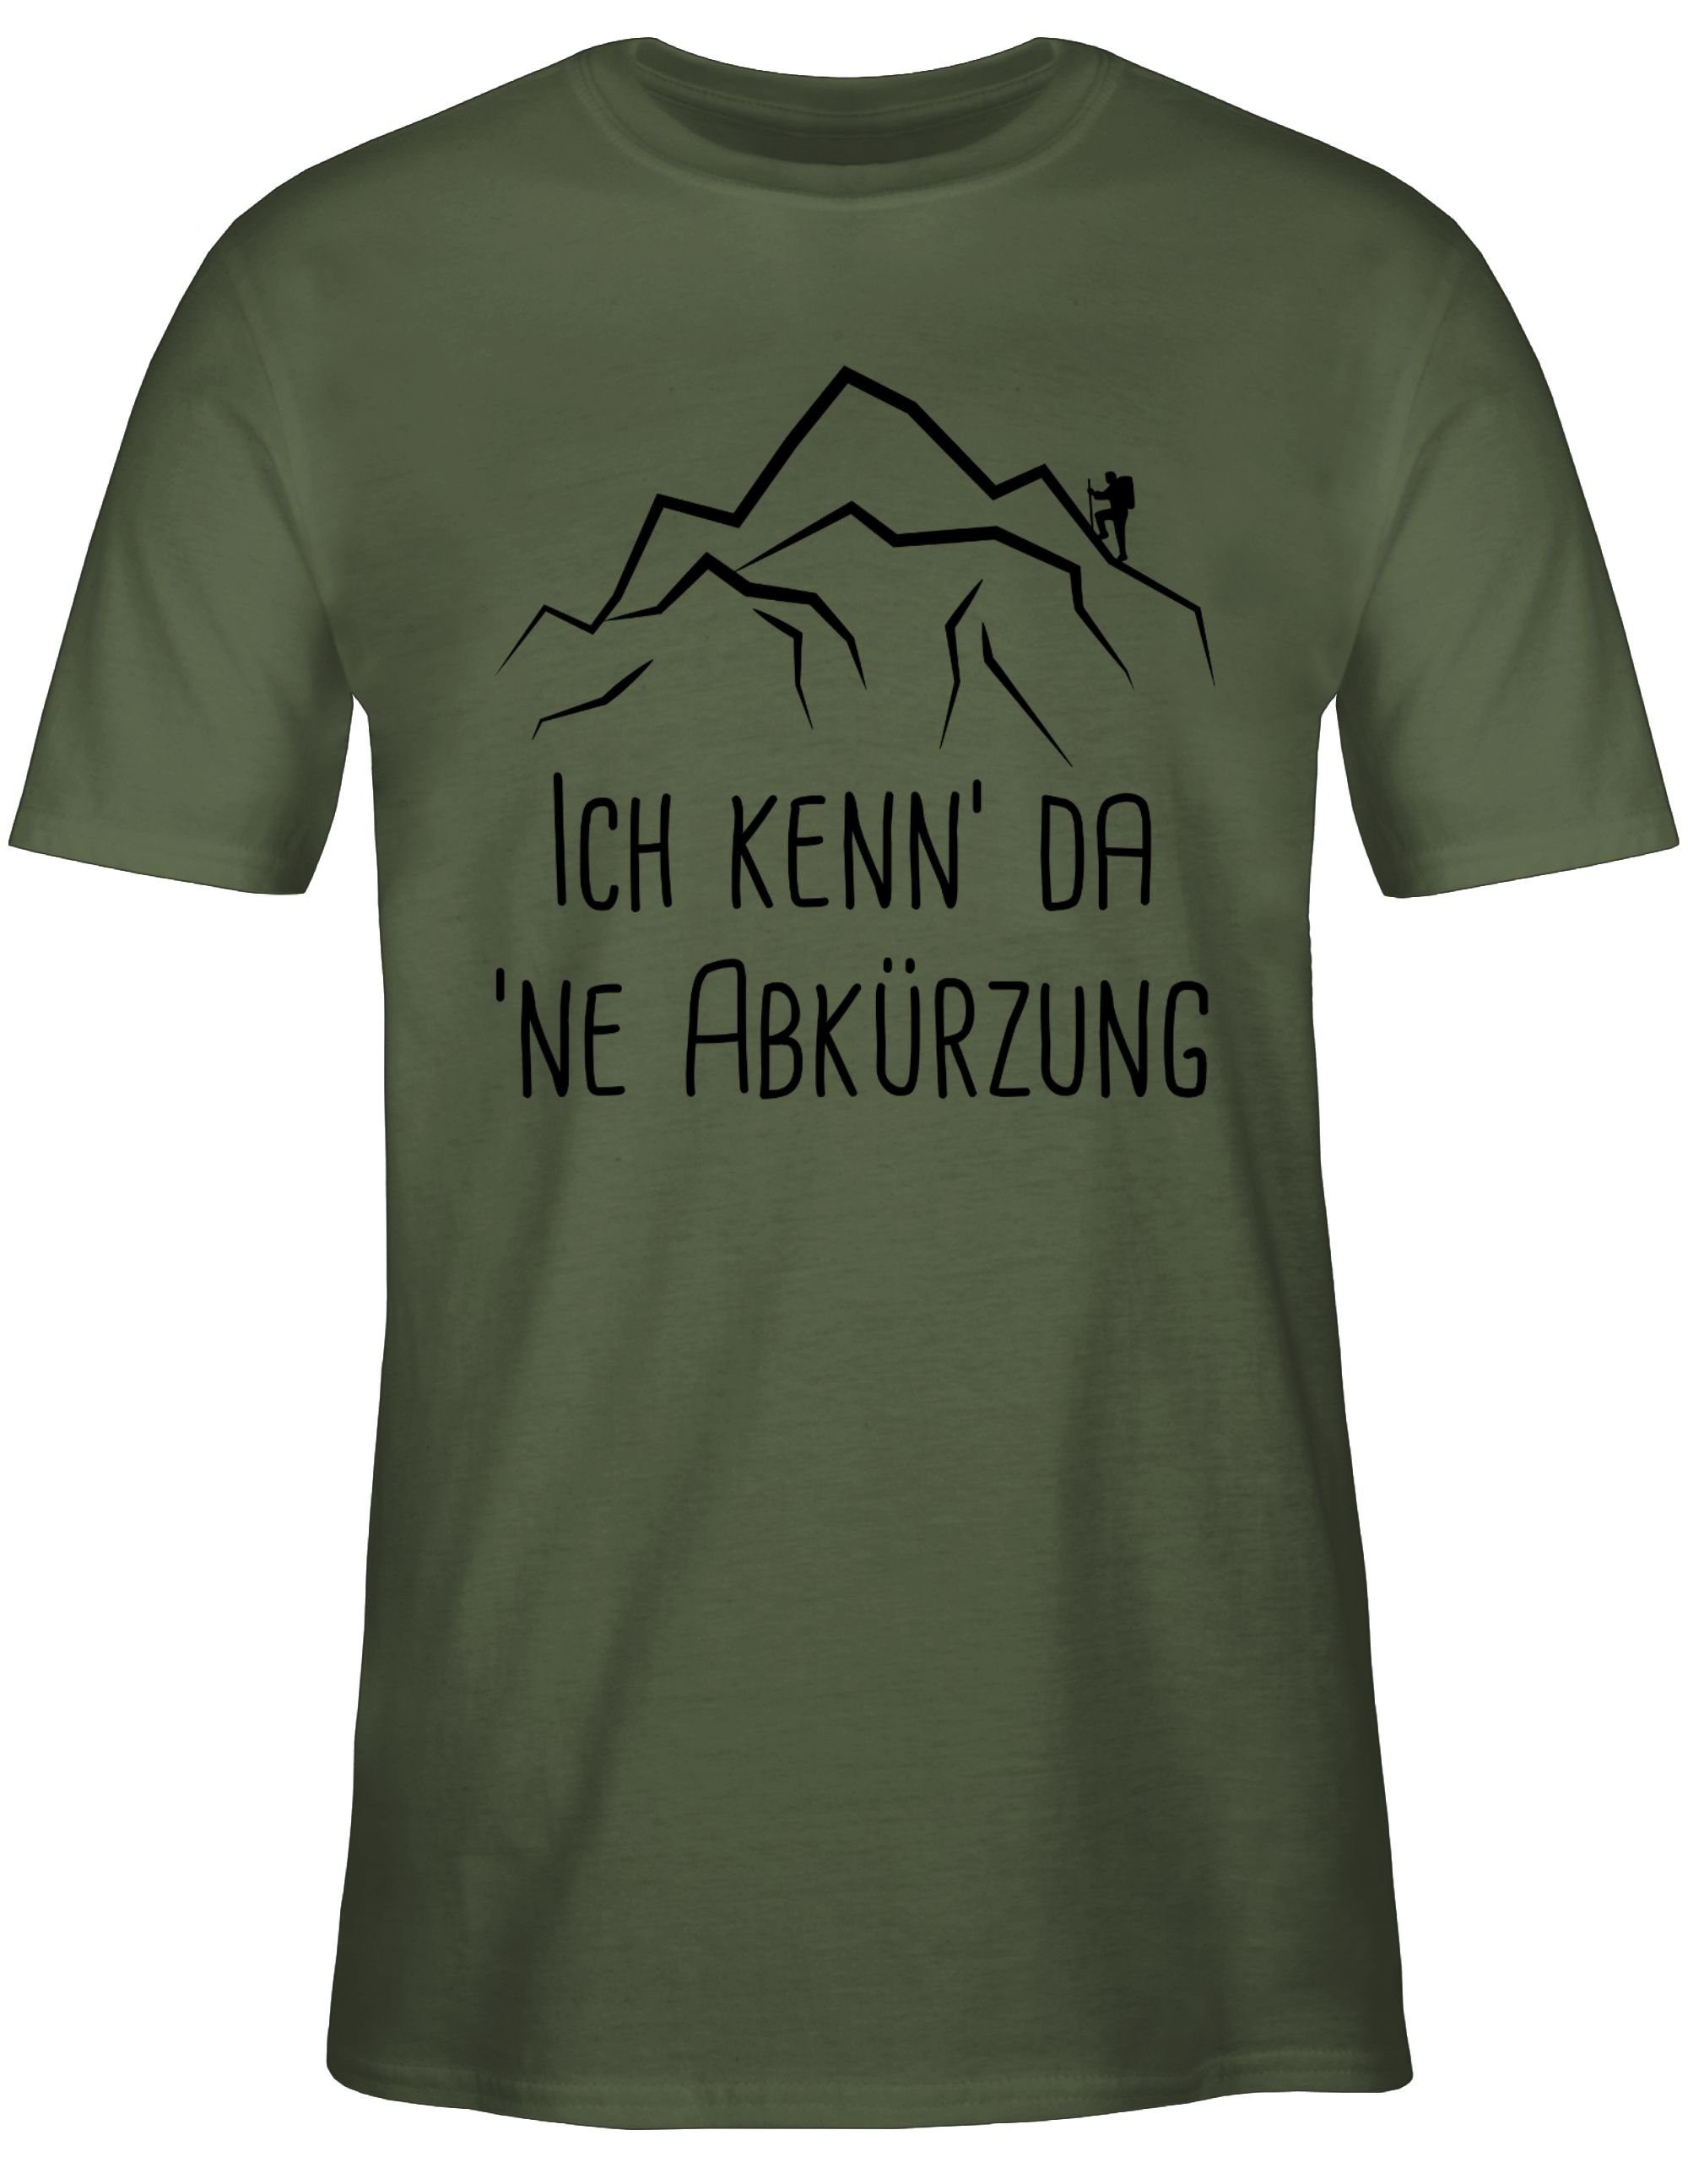 Shirtracer T-Shirt Ich schwarz Hobby da - Outfit kenn' Grün Army 03 'ne Abkürzung